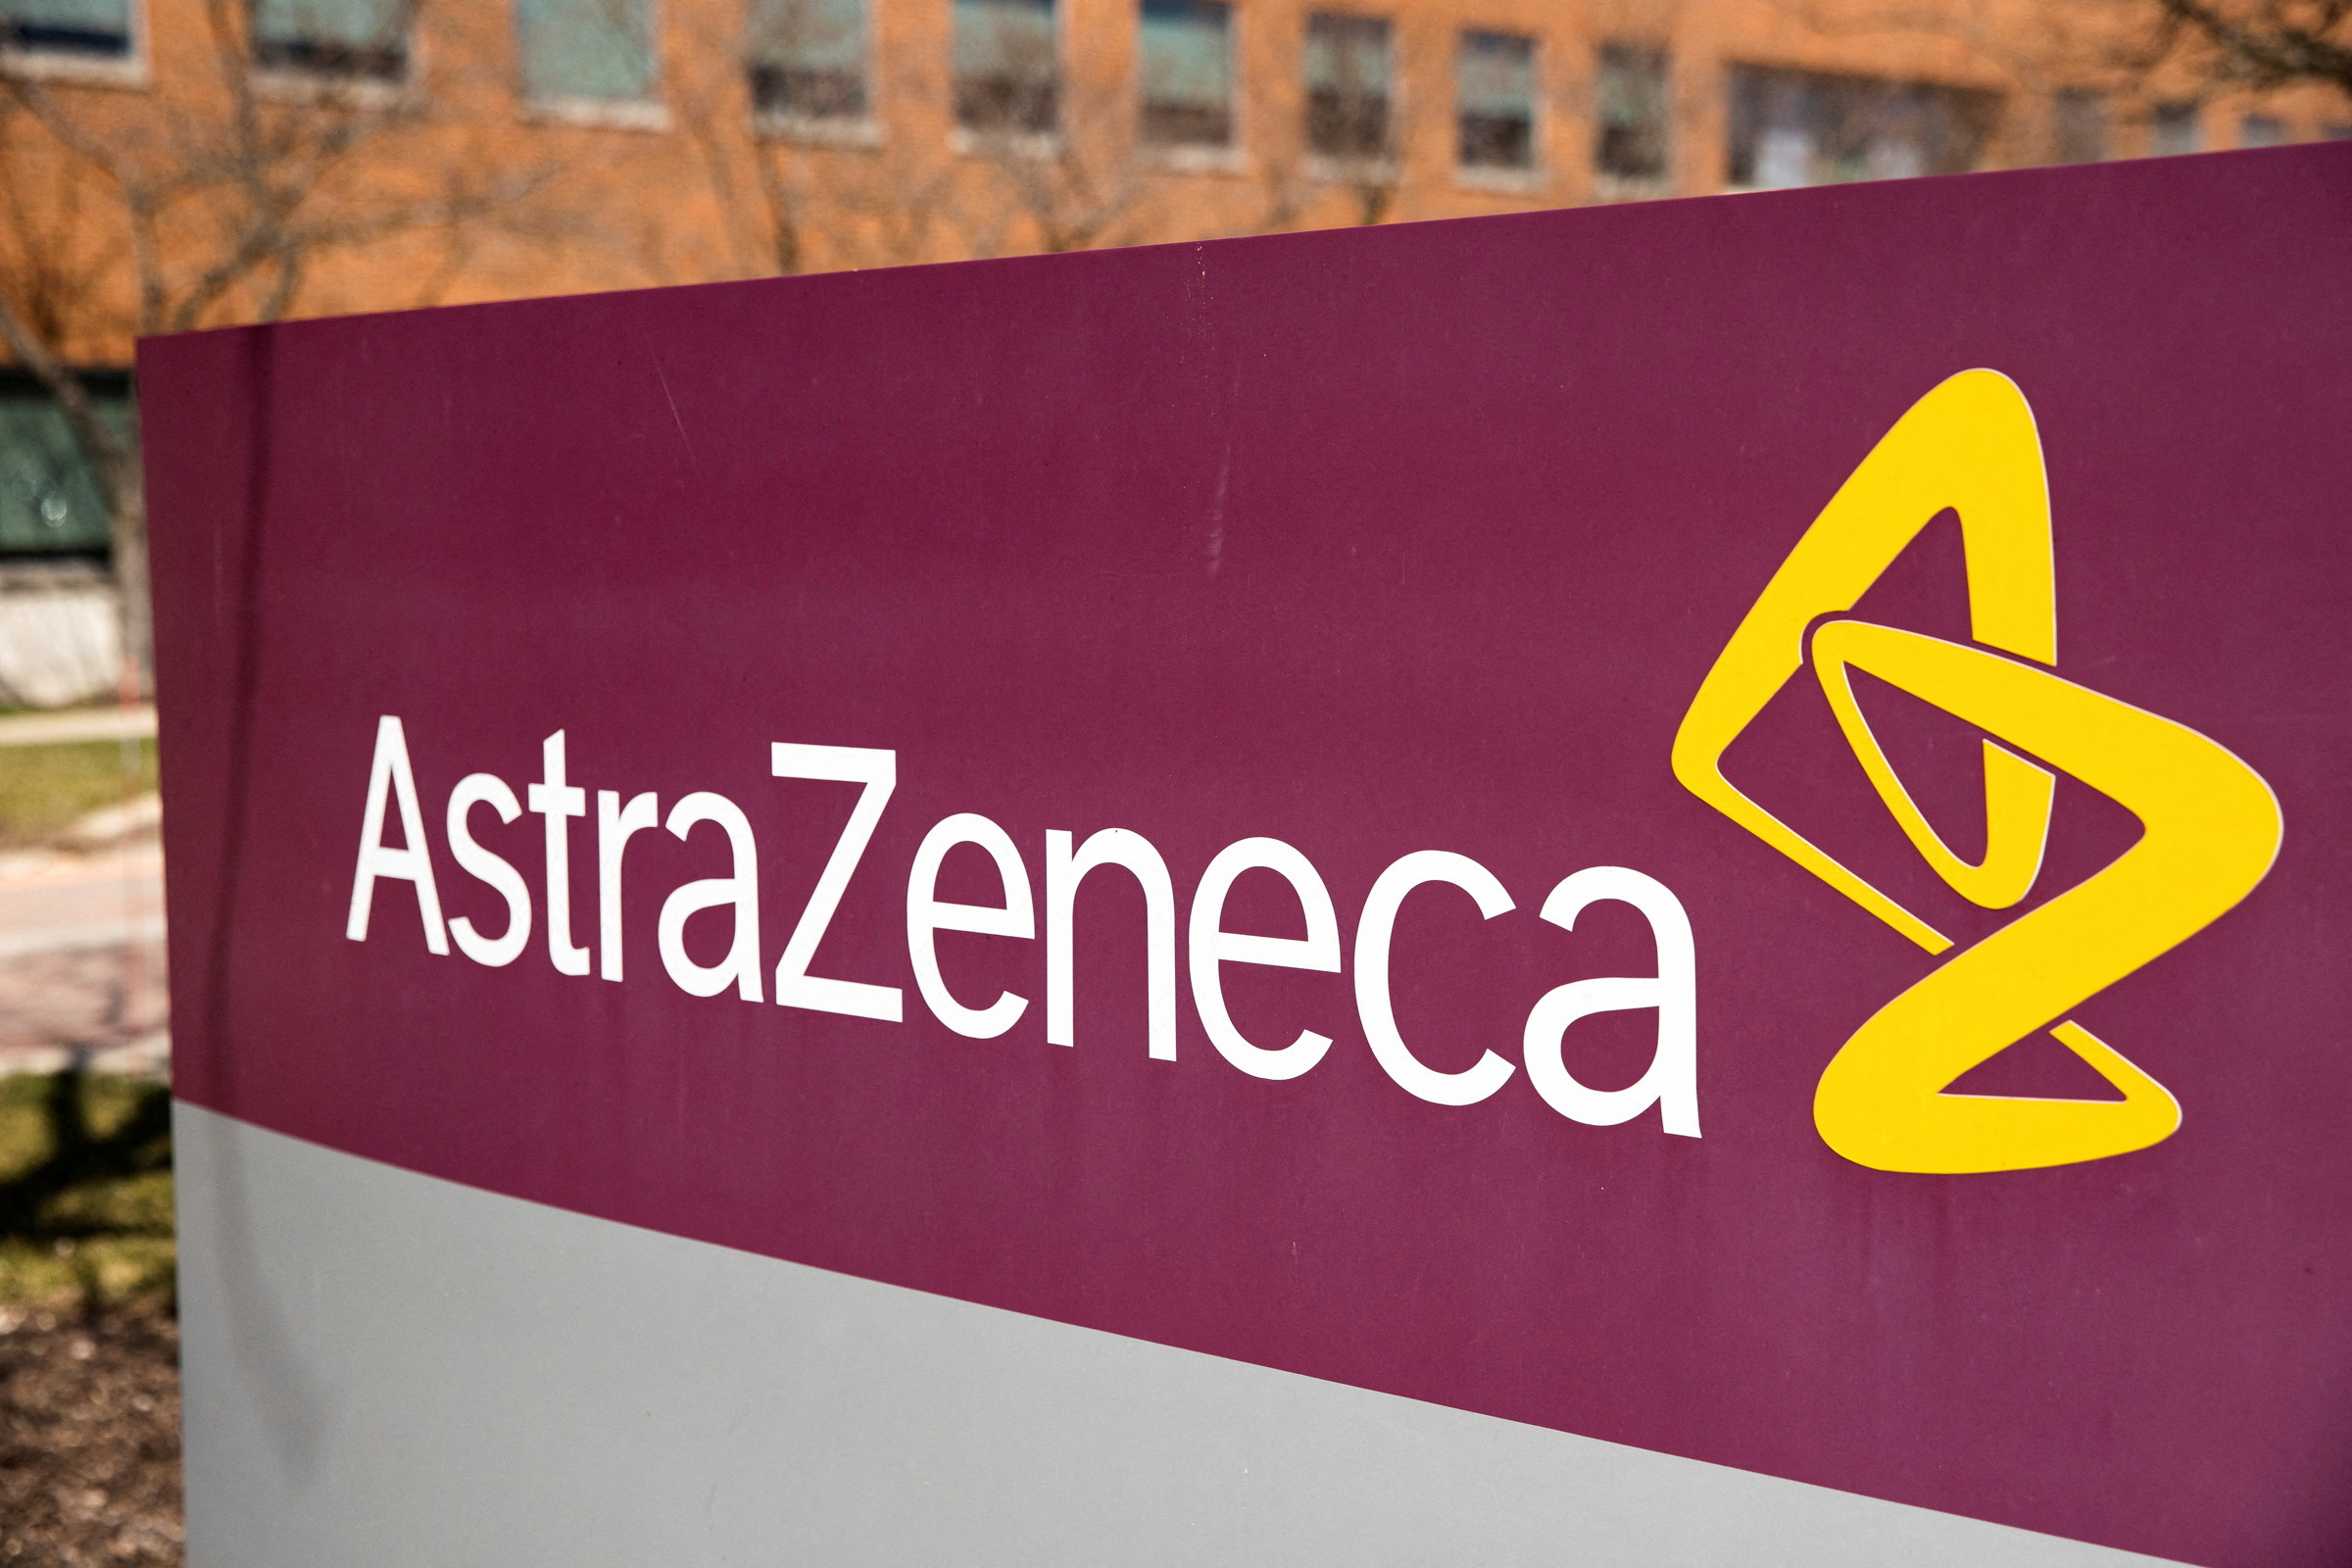 FILE PHOTO: The logo for AstraZeneca is seen outside its North America headquarters in Wilmington, Delaware, U.S., March 22, 2021. REUTERS/Rachel Wisniewski